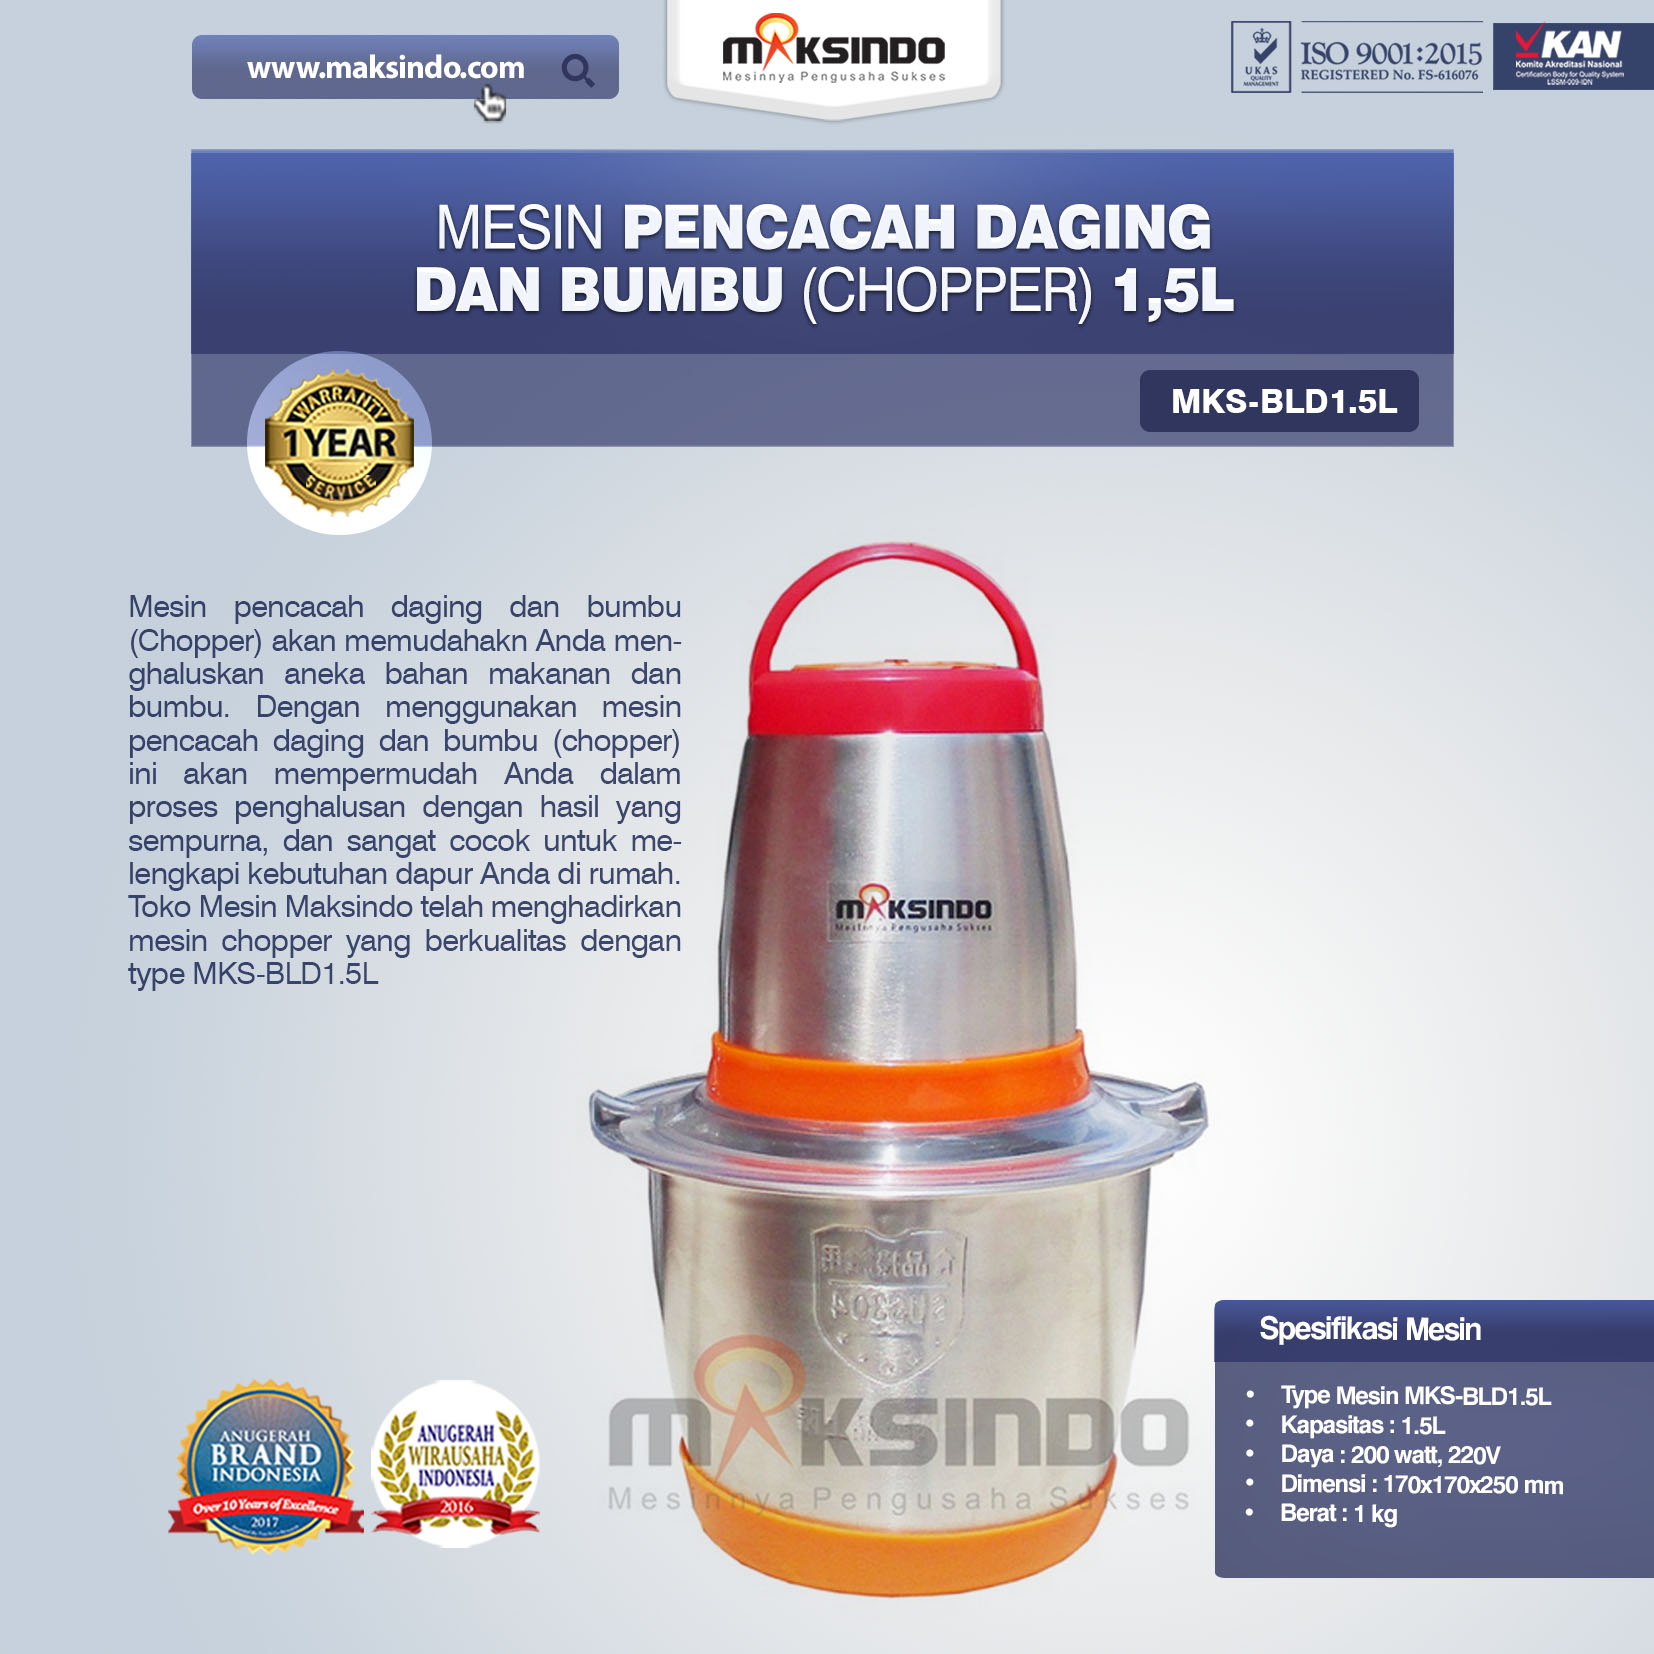 Jual Mesin Pencacah Daging Dan Bumbu (Chopper) MKS-BLD1.5L di Banjarmasin